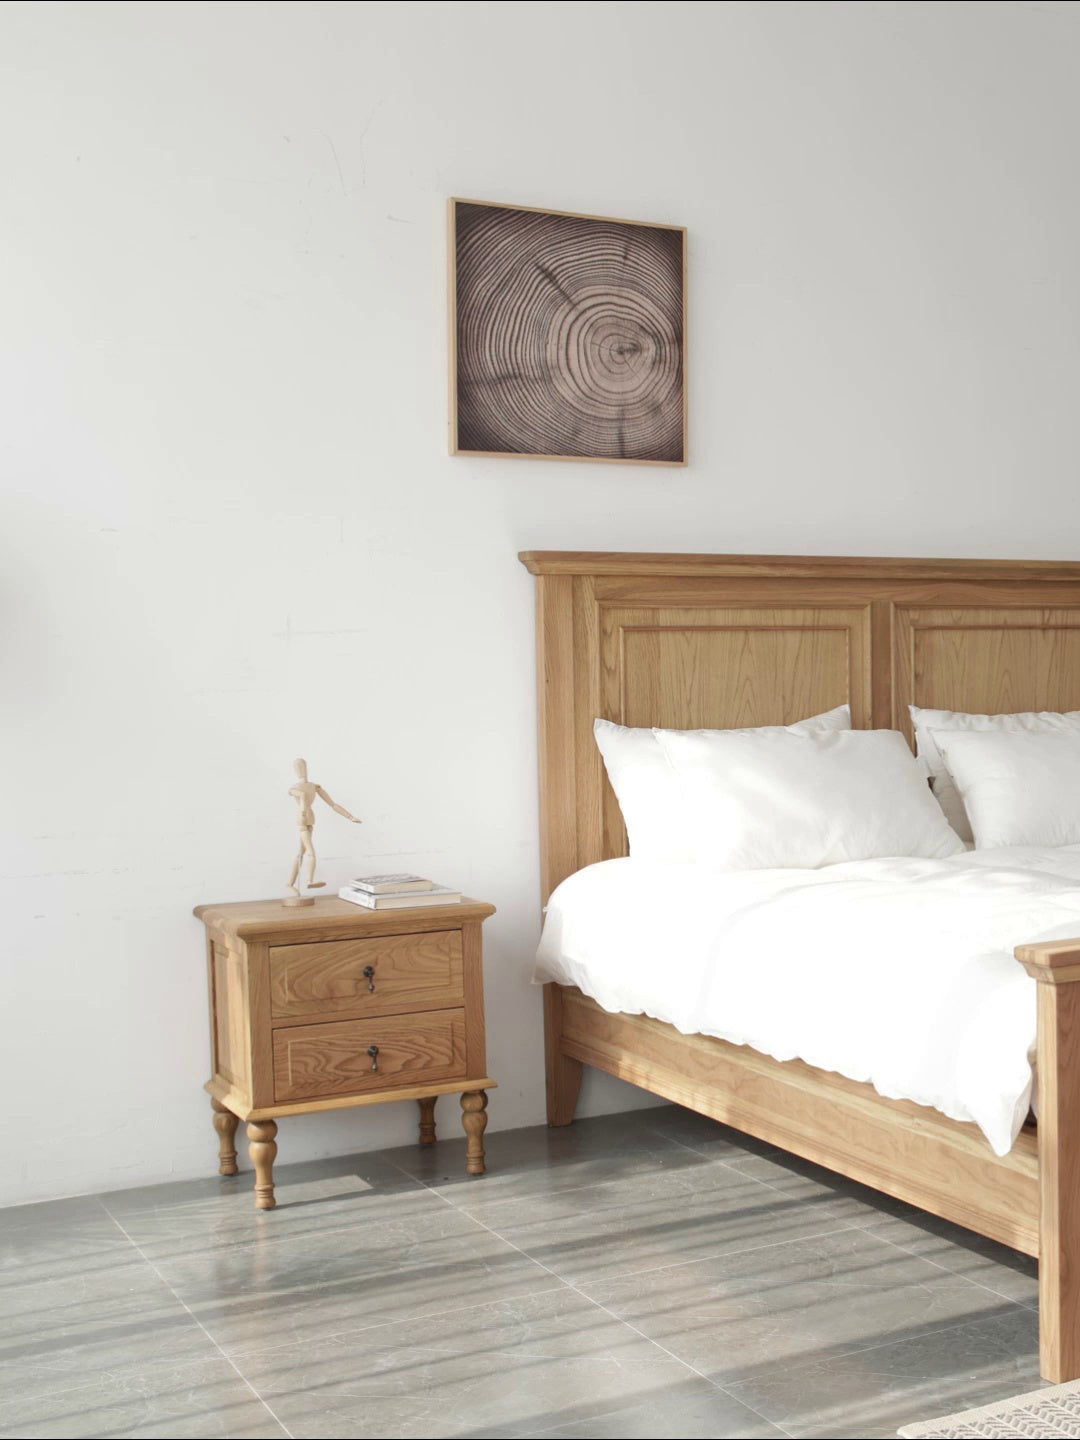 Bett aus hellem Eichenholz, Bettgestell aus Eichenholz für King-Size-Betten, Etagenbetten aus Eichenholz